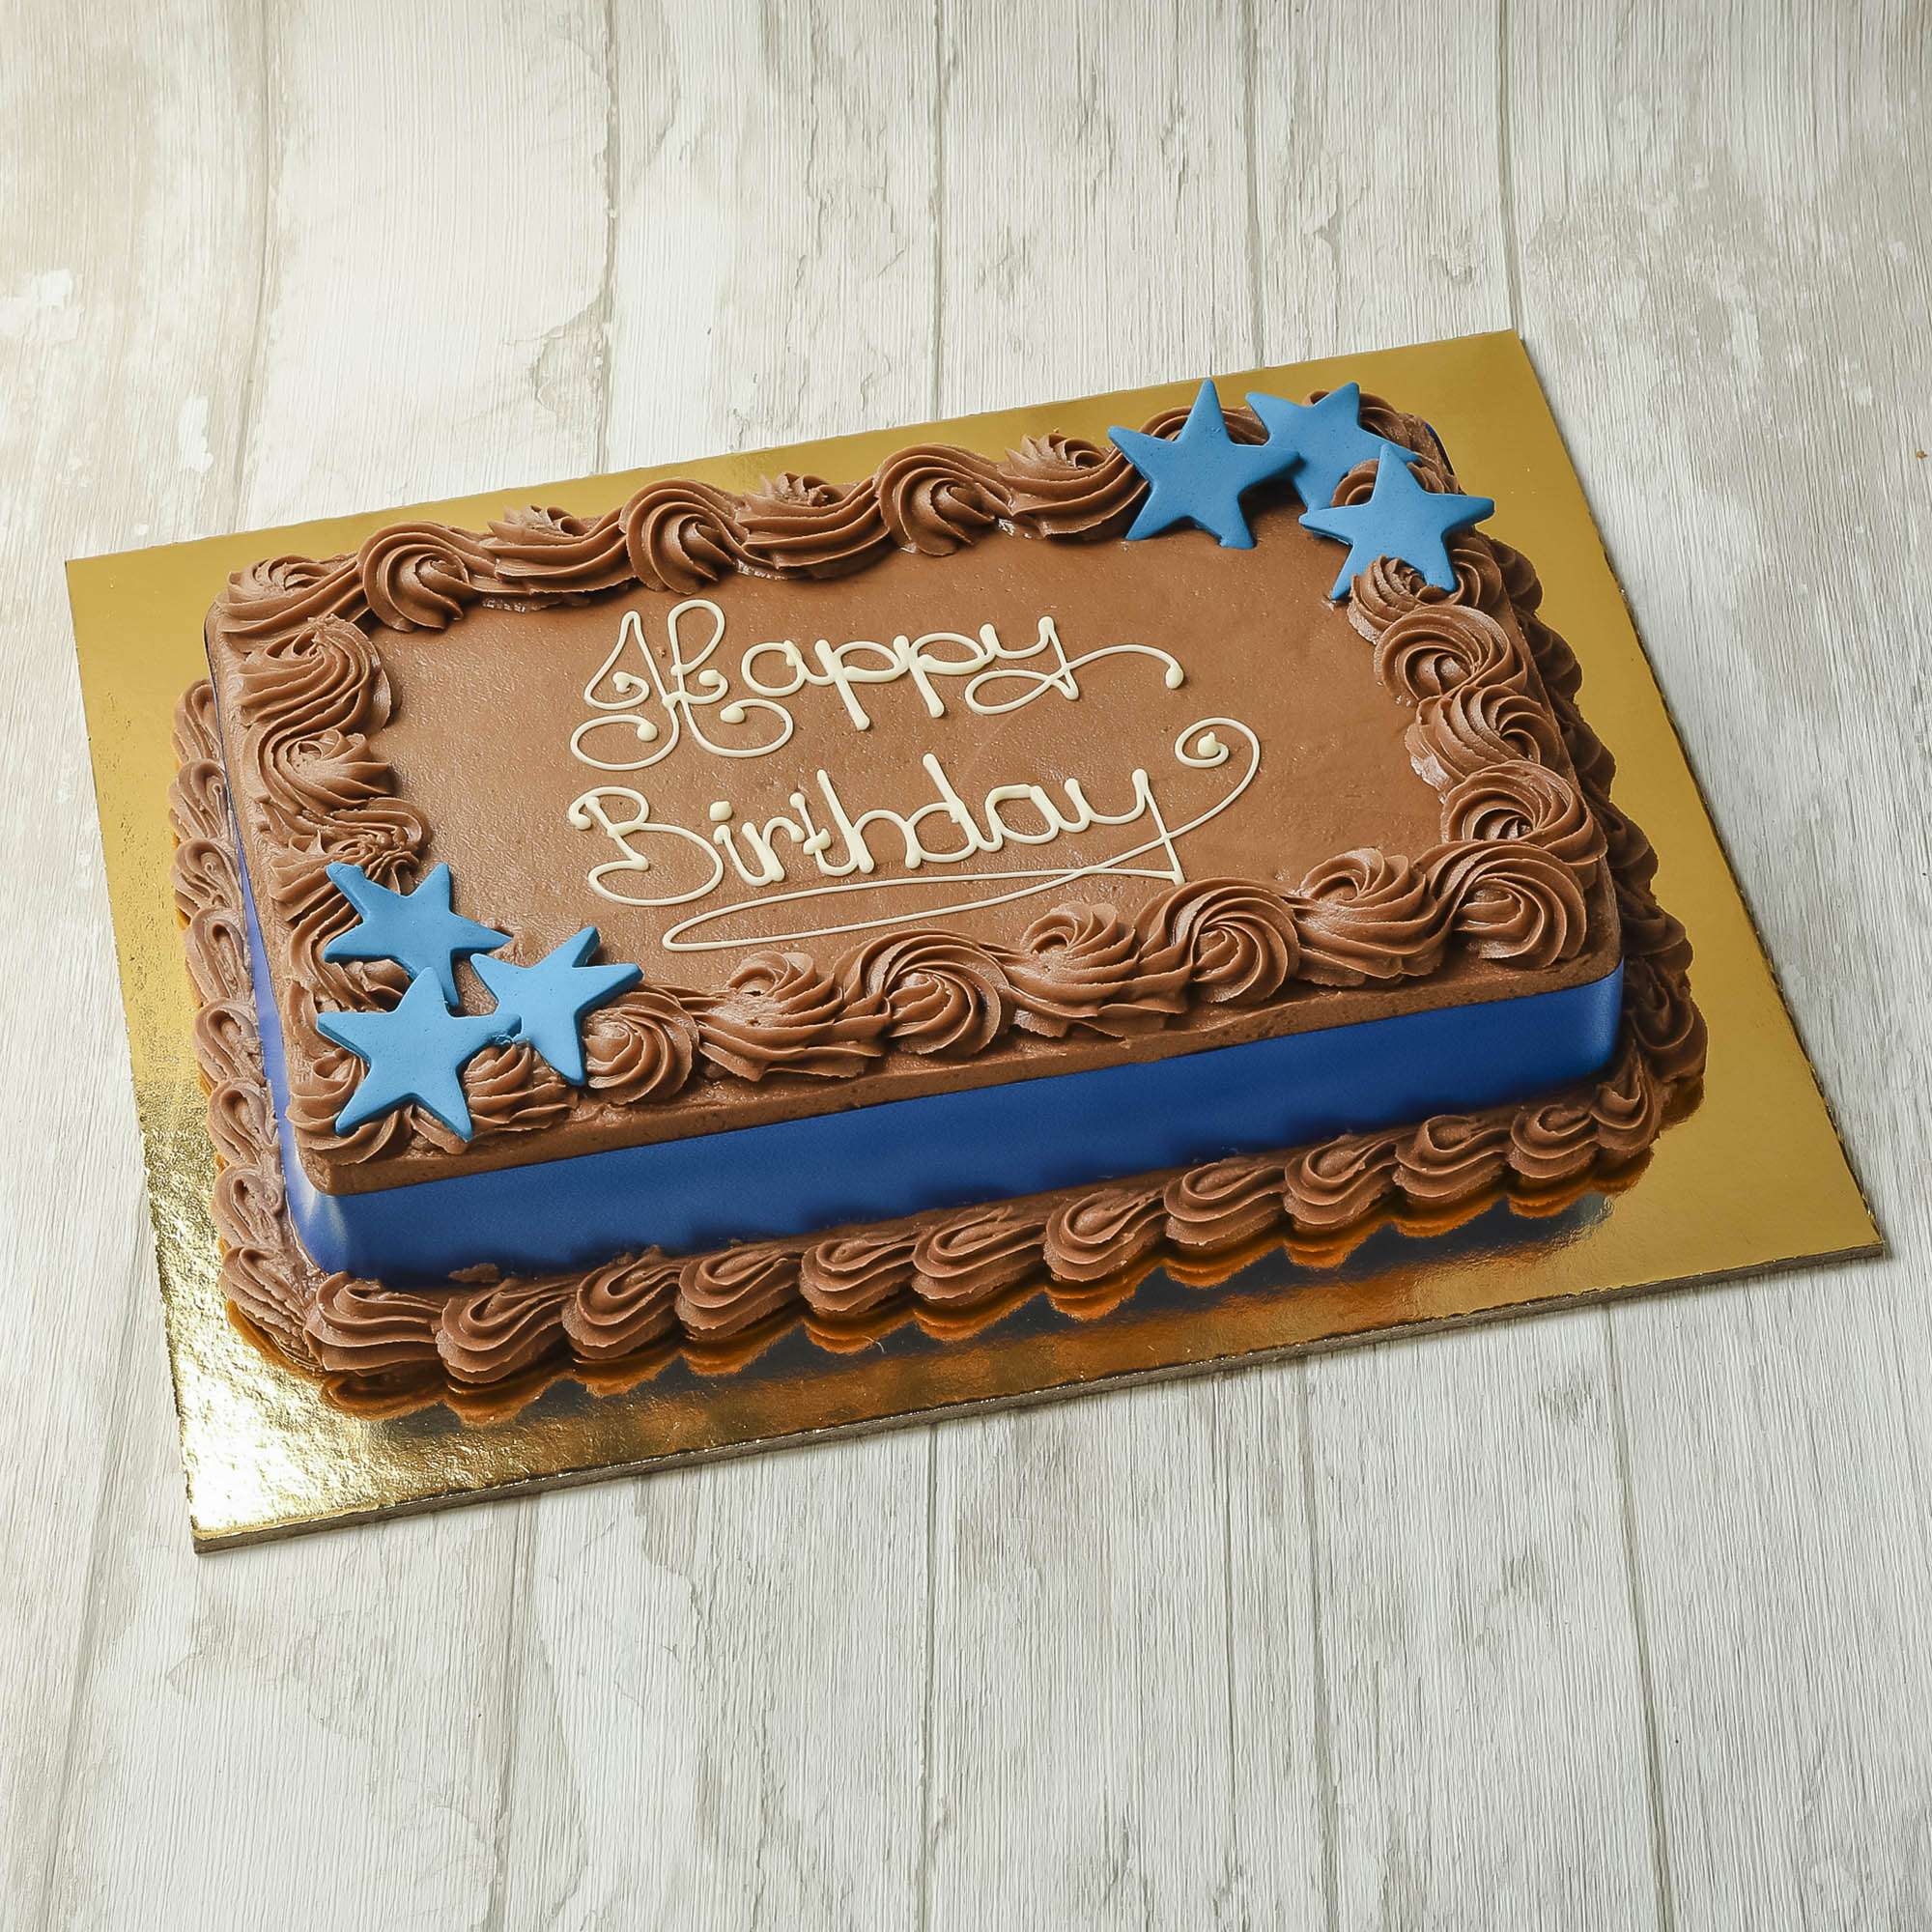 Celebrations Cake Shop In Mumbai | Celebration Cake In Mumbai - Deliciae  Cakes